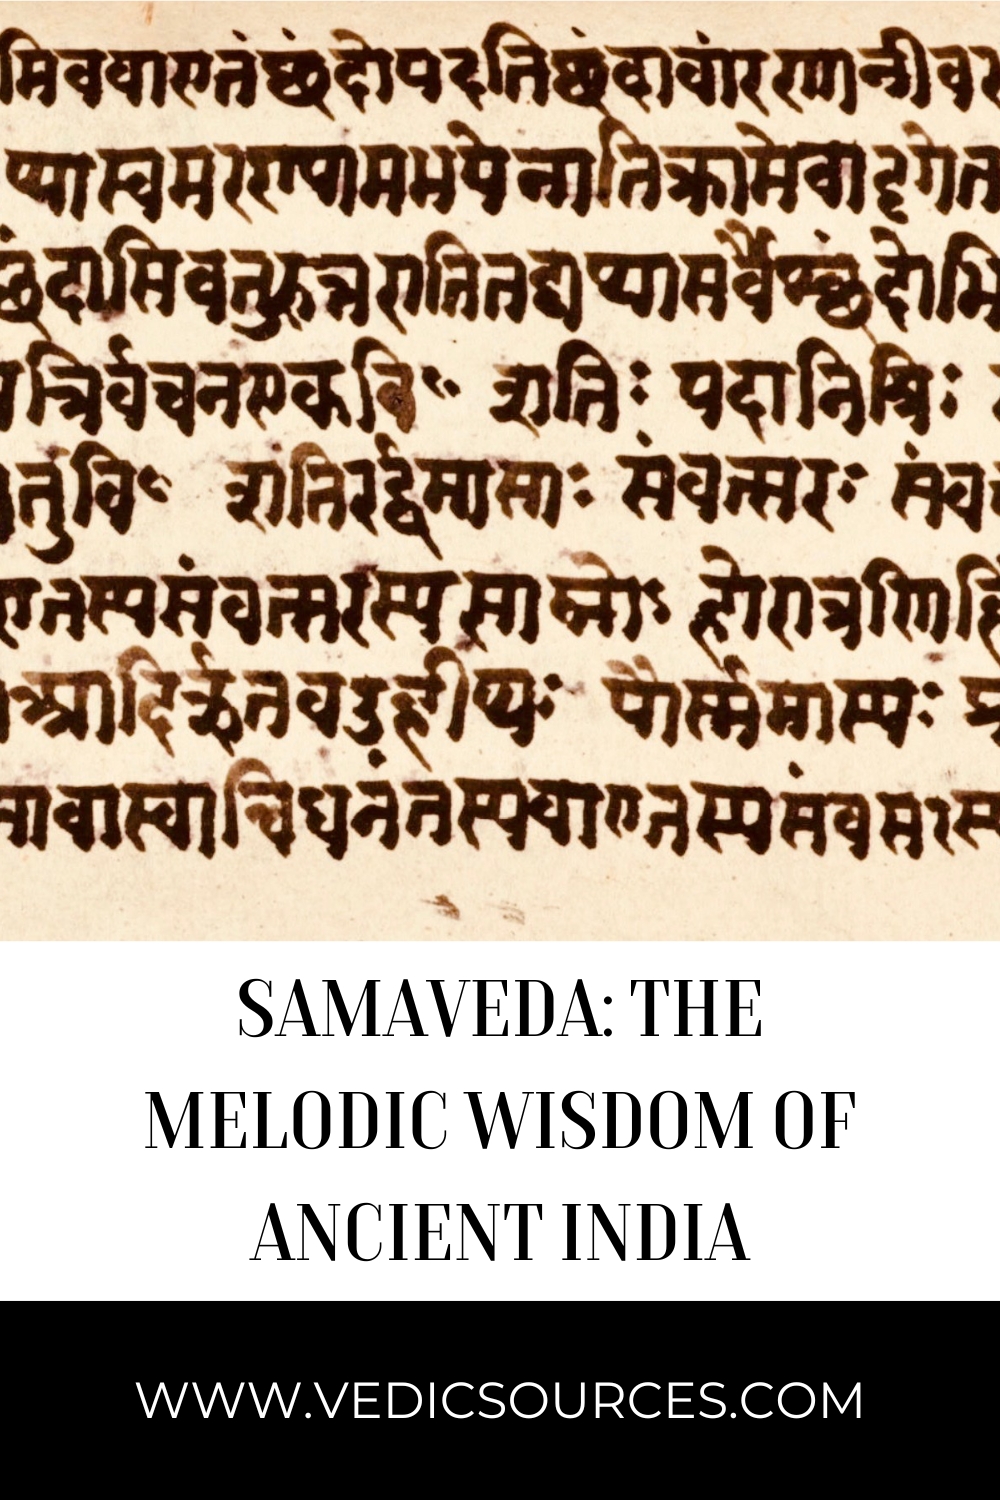 Samaveda: The Melodic Wisdom of Ancient India